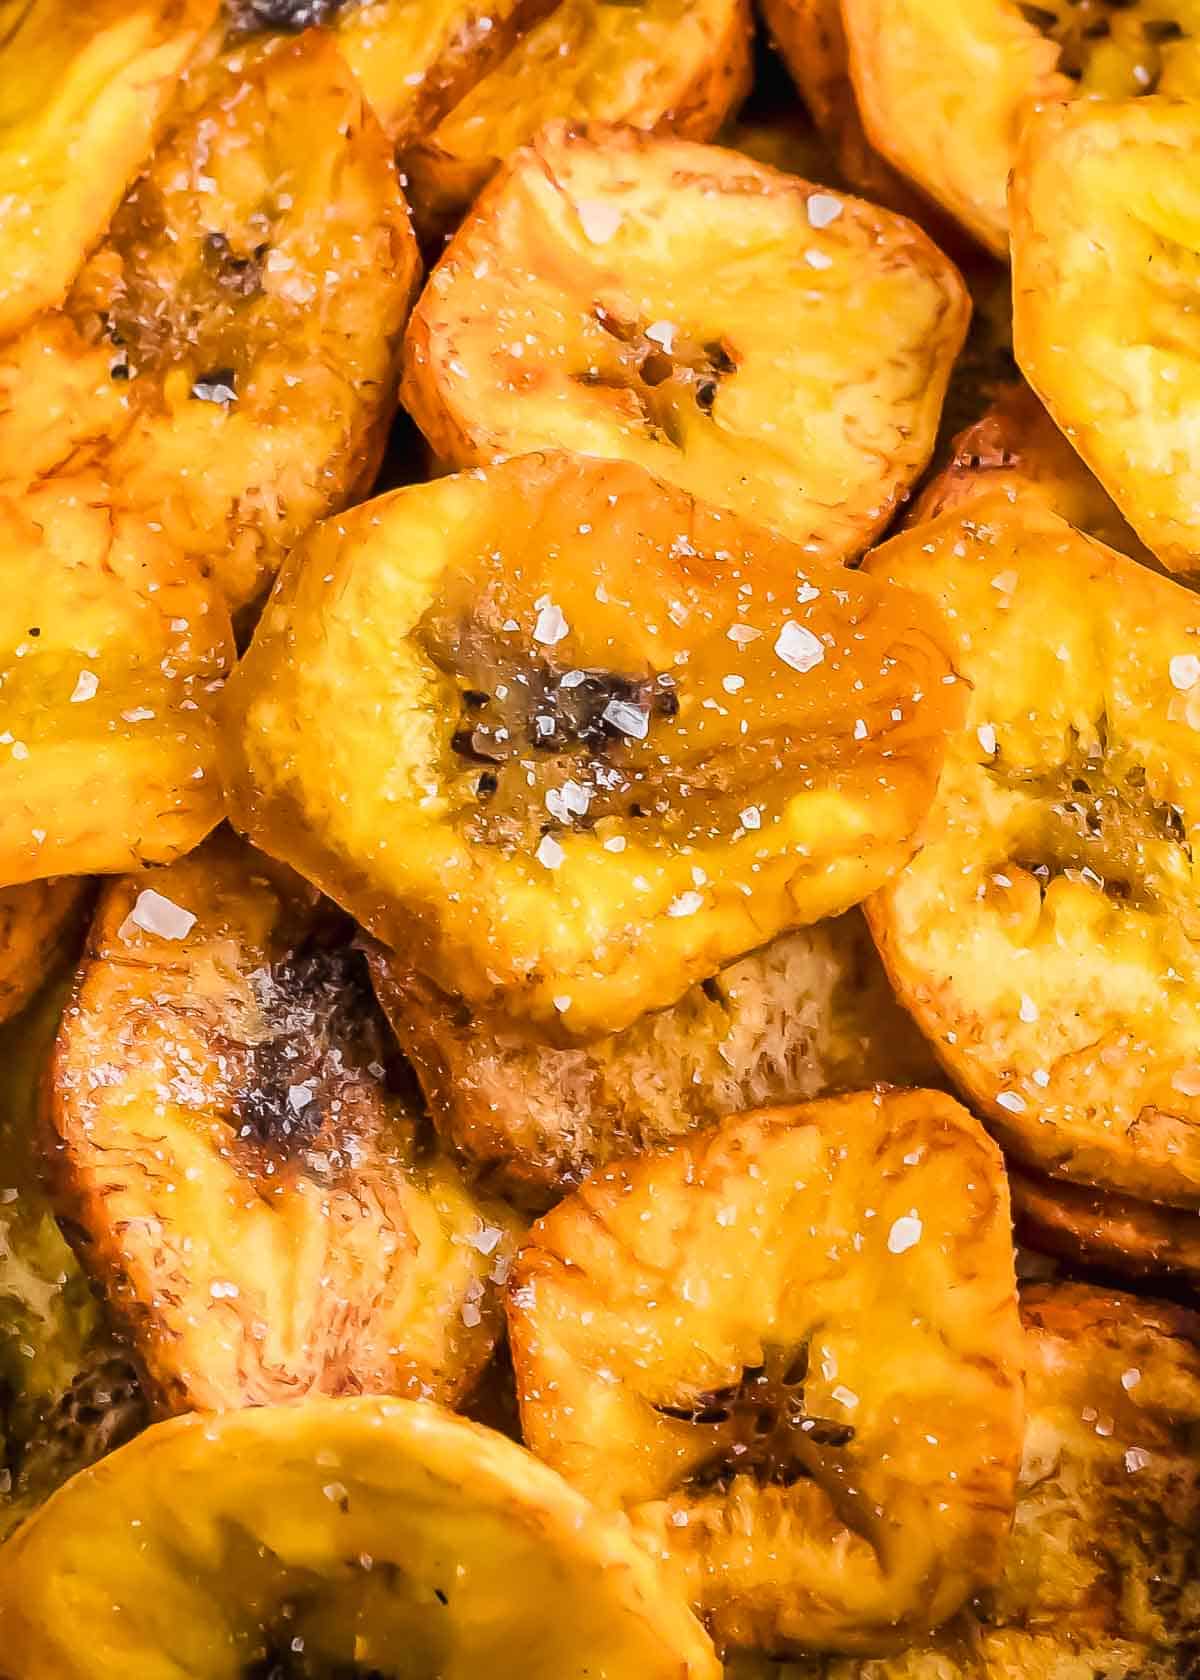 Fried plantain slices sprinkled with salt.